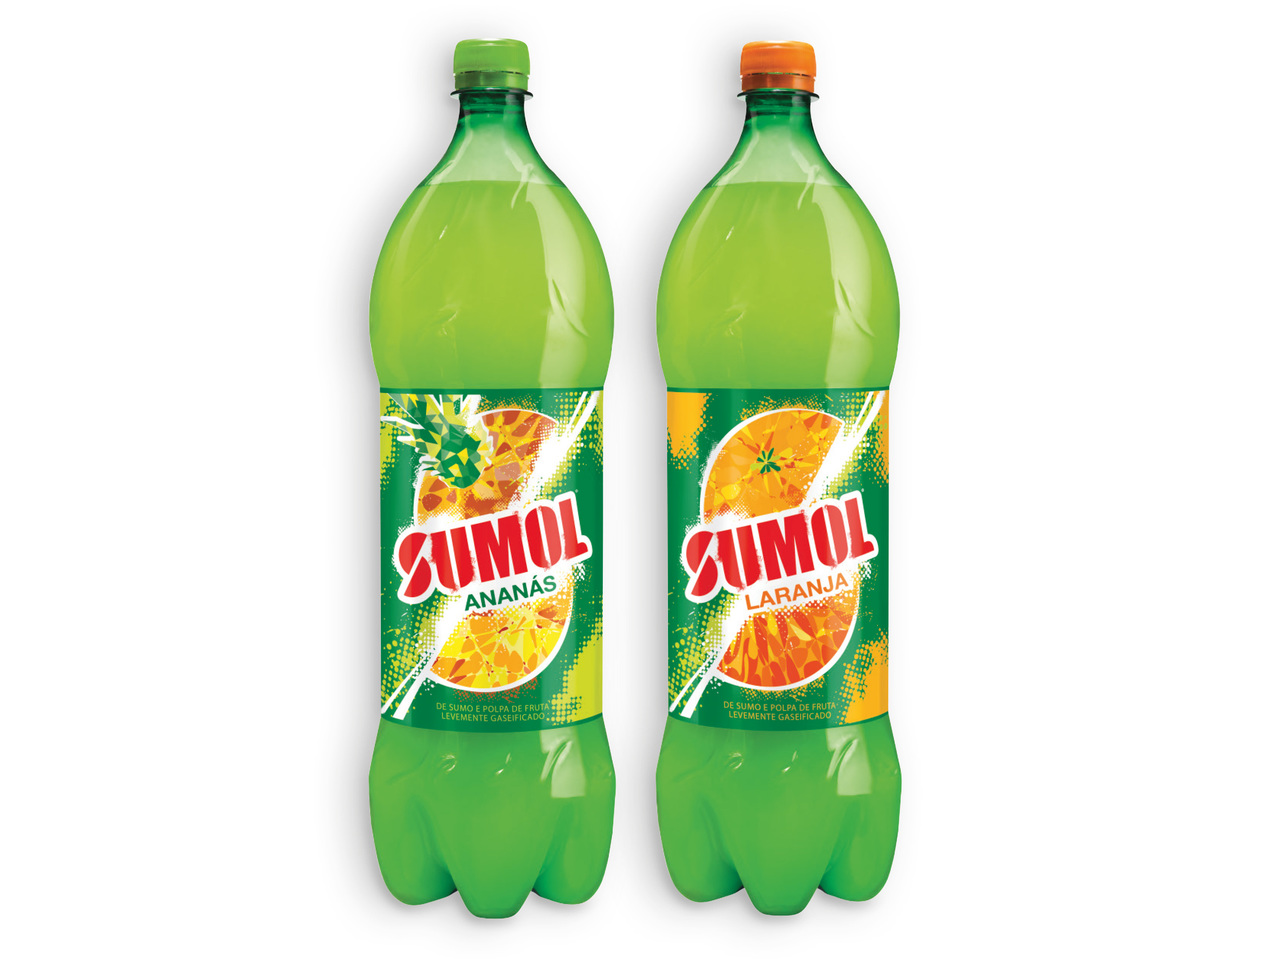 SUMOL(R) Ananás / Laranja